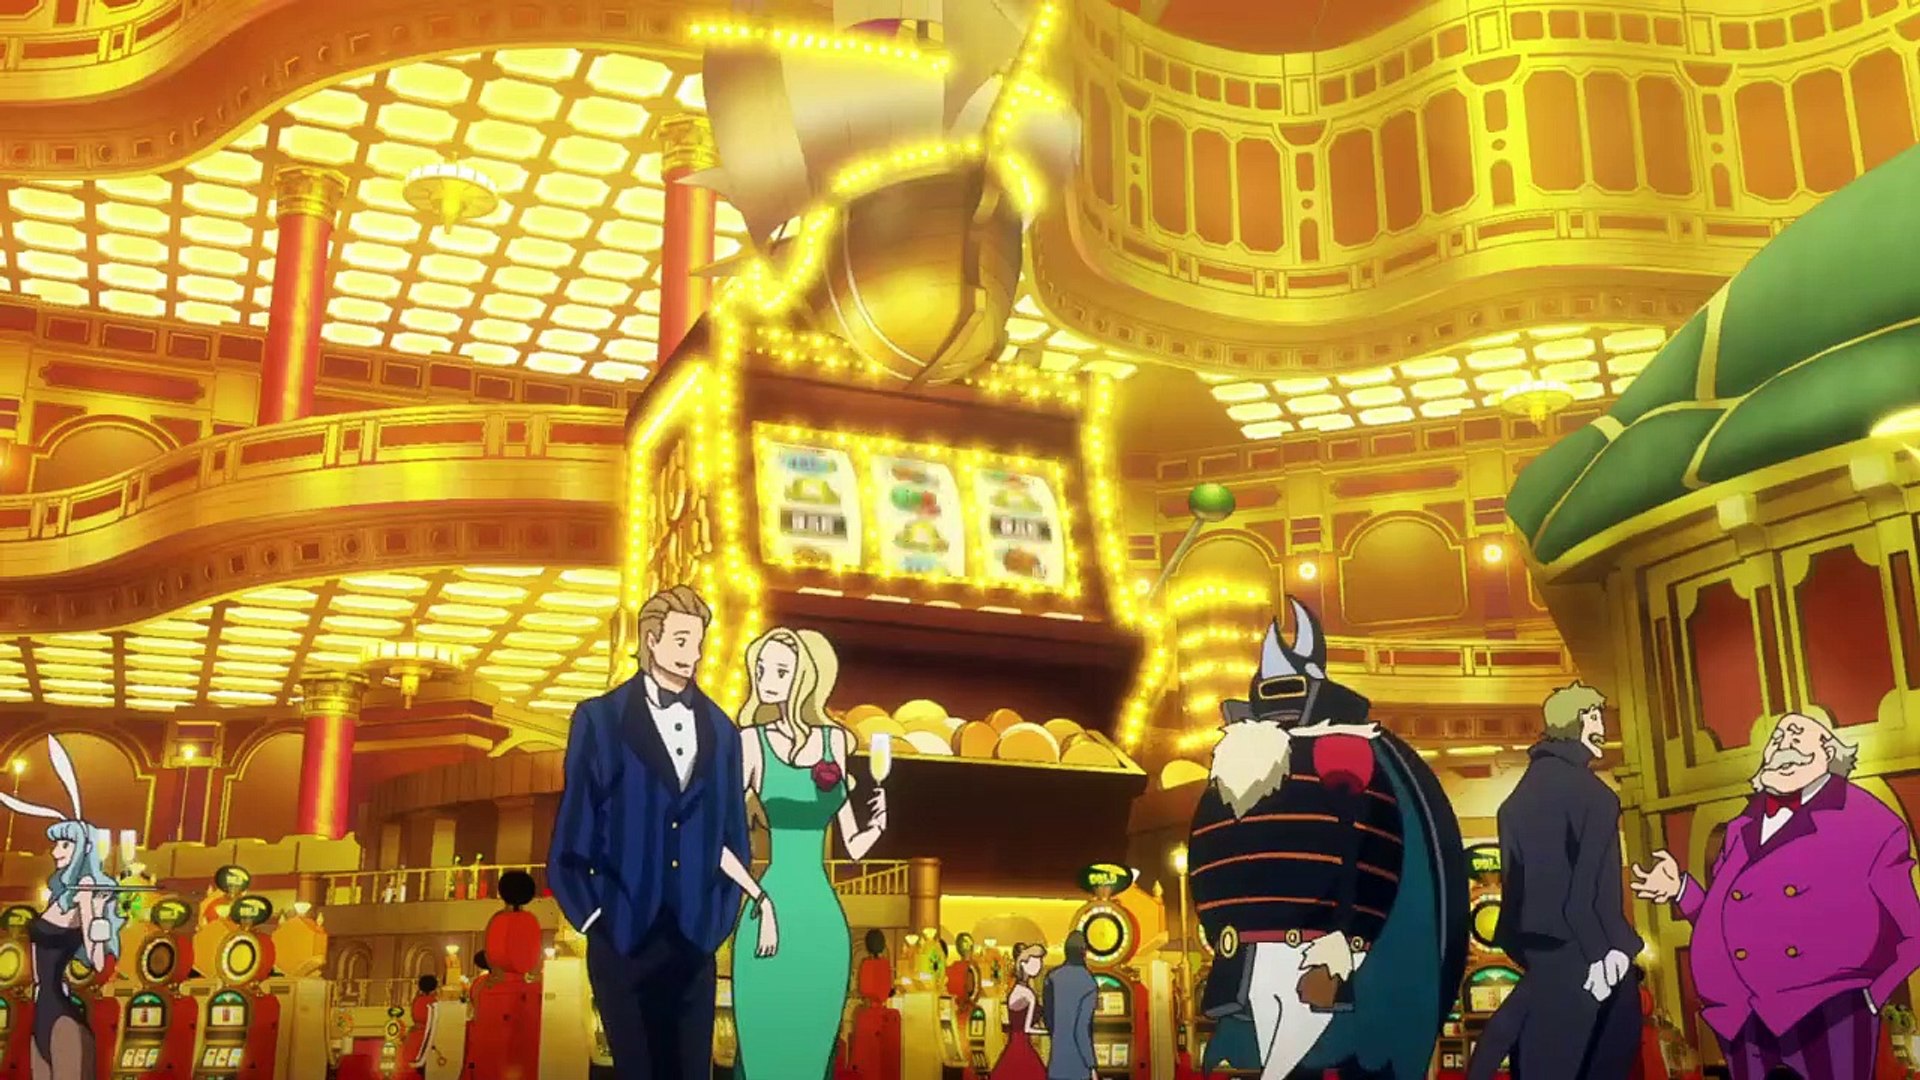 One Piece Film Gold